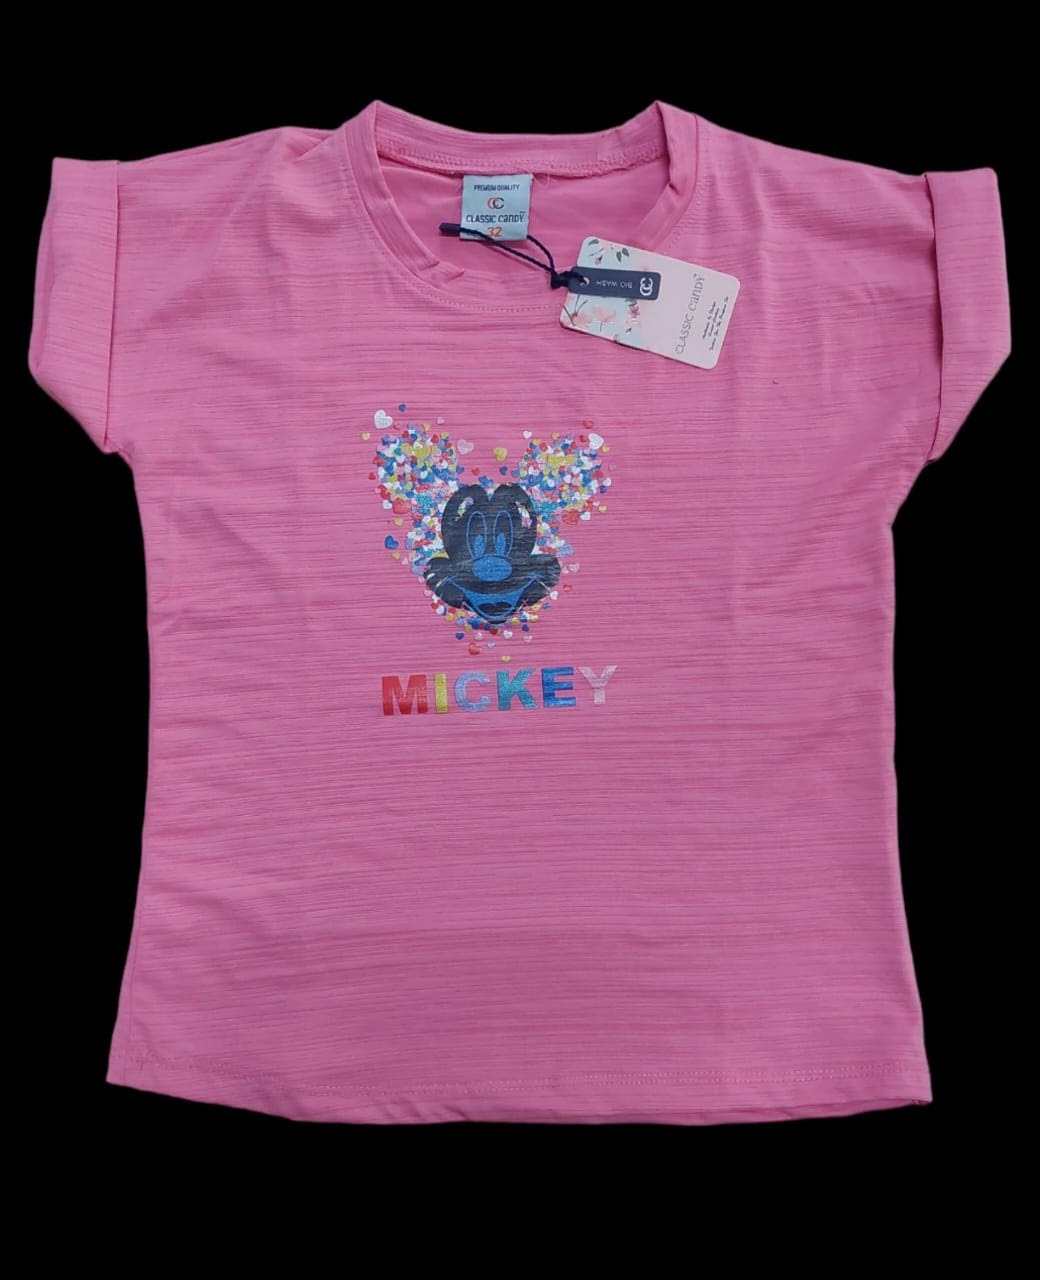 Design 1. Classic Candy Lycra Girls Tshirt